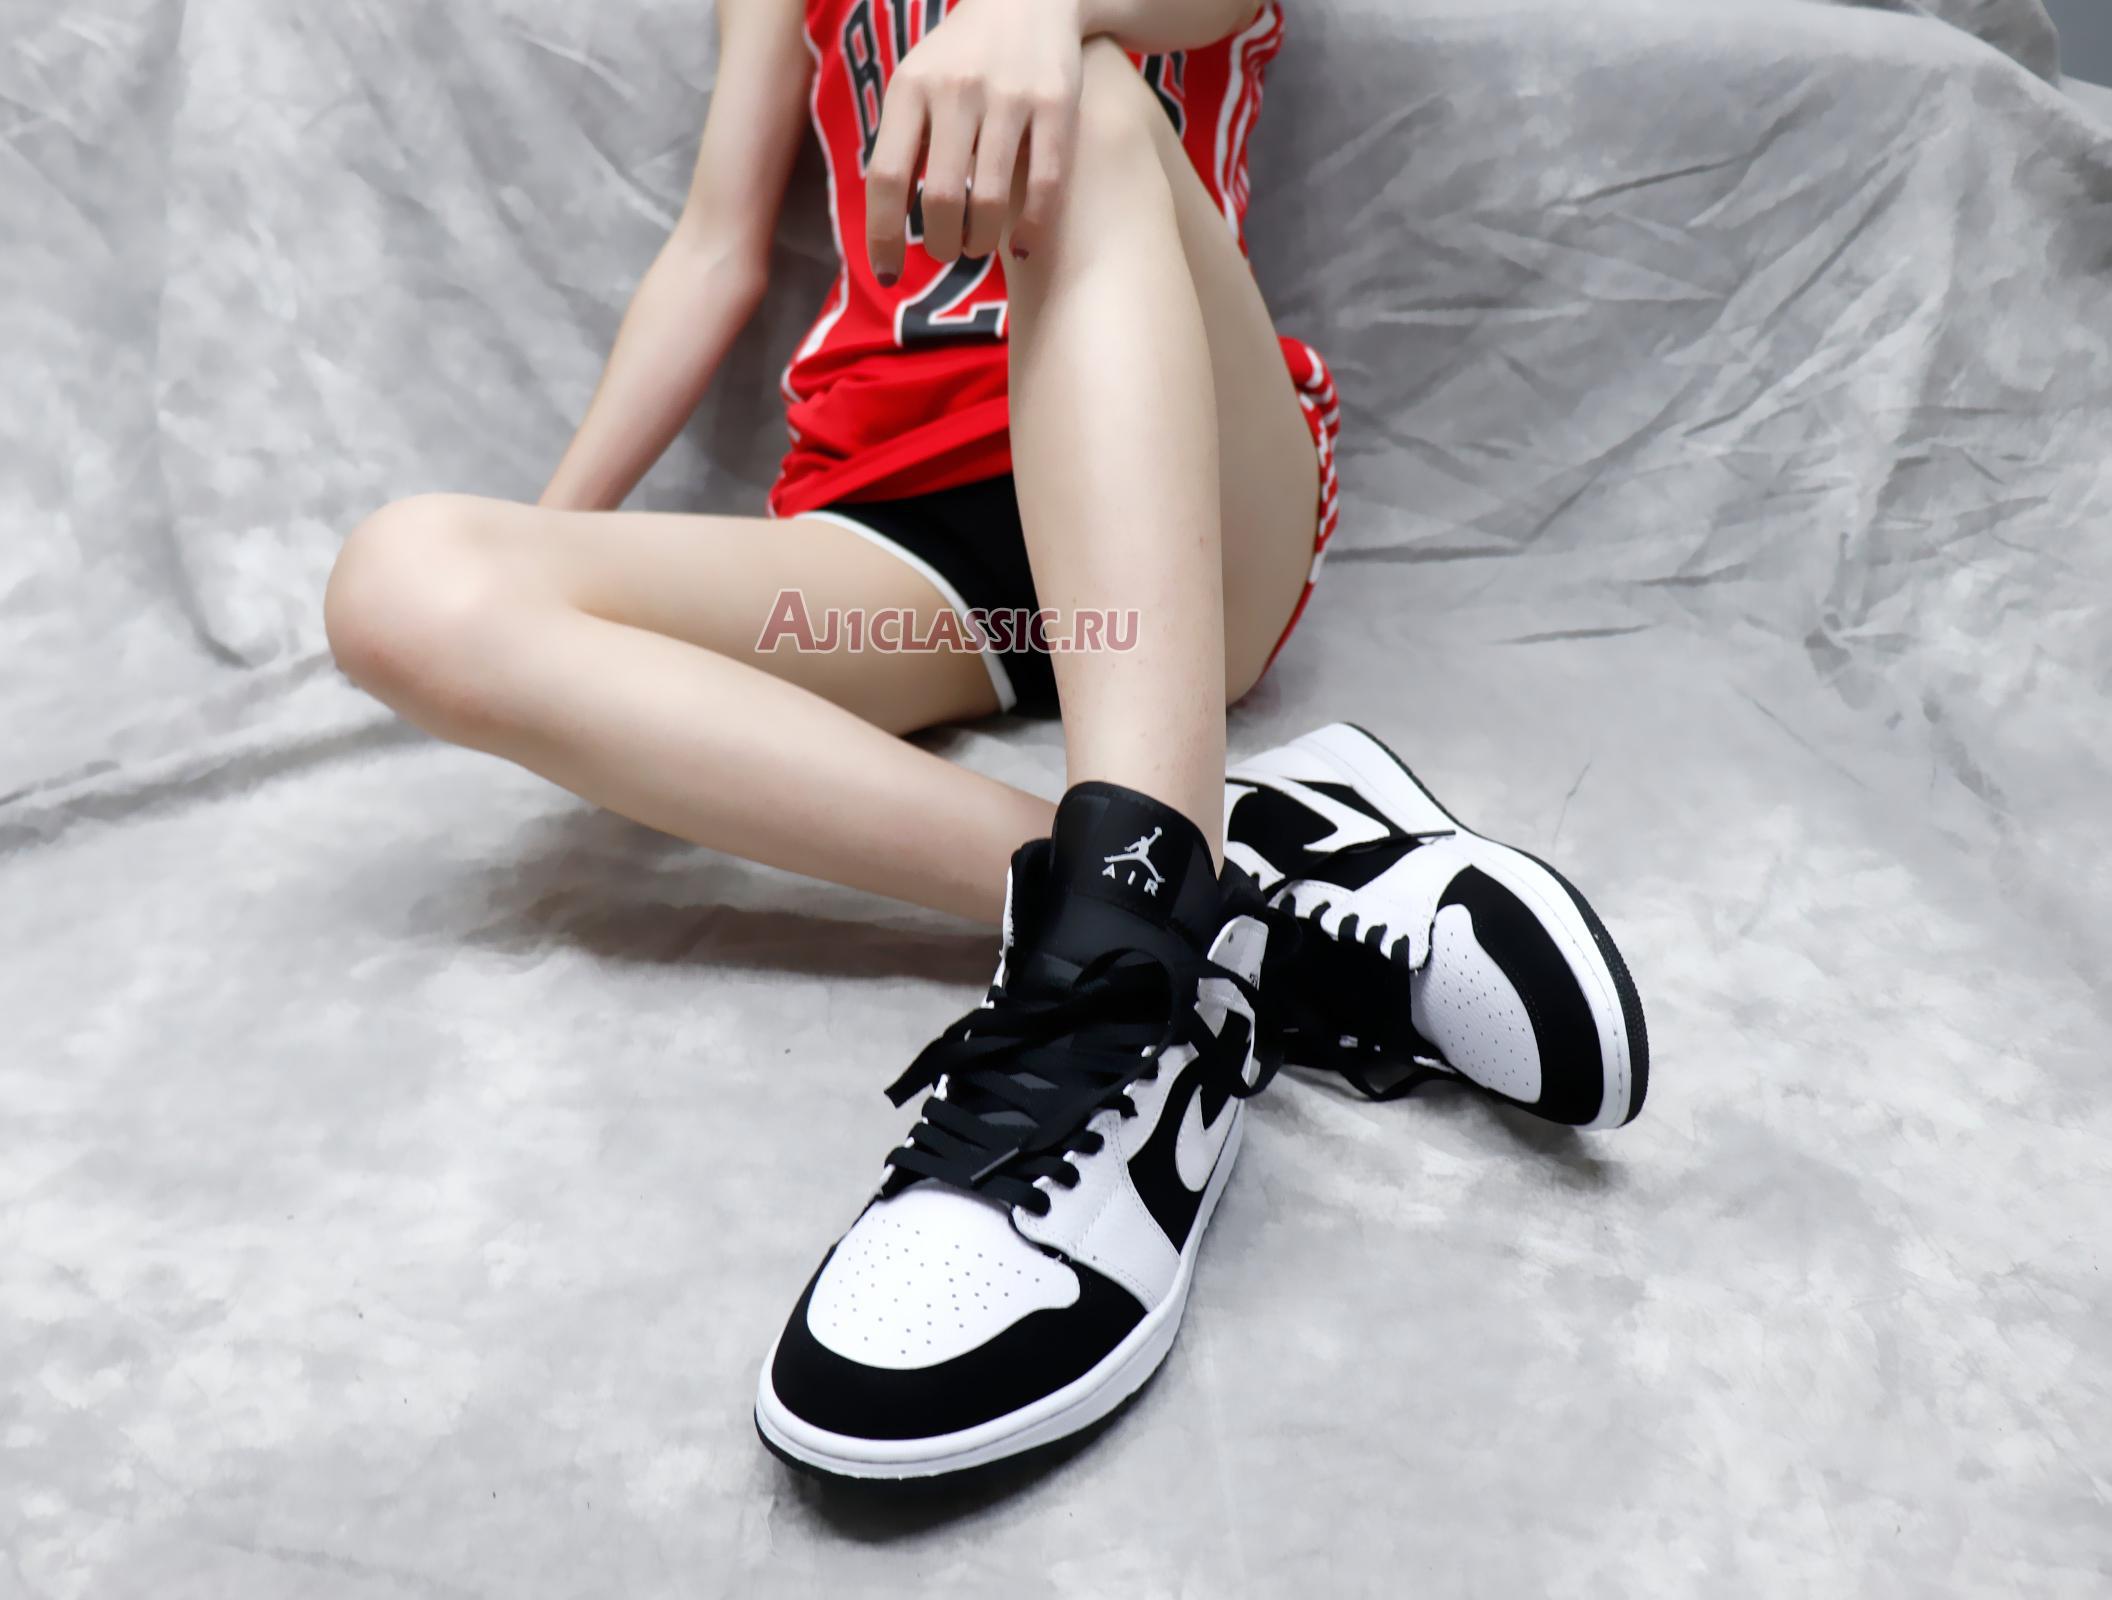 Air Jordan 1 Retro Mid Tuxedo 554724-113 Black/White Sneakers